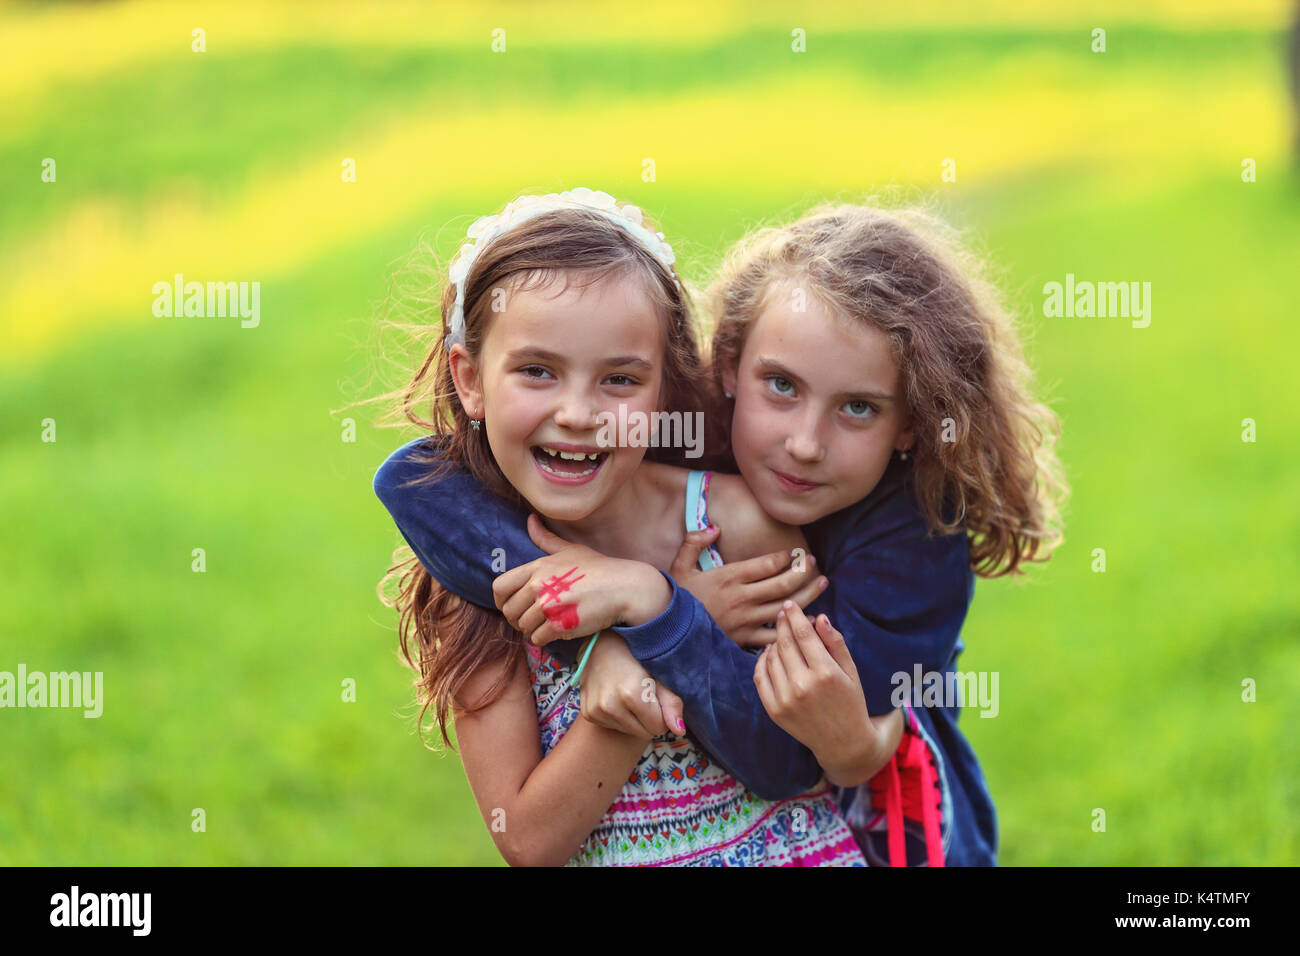 Friendly hugging of two joyful girls Stock Photo